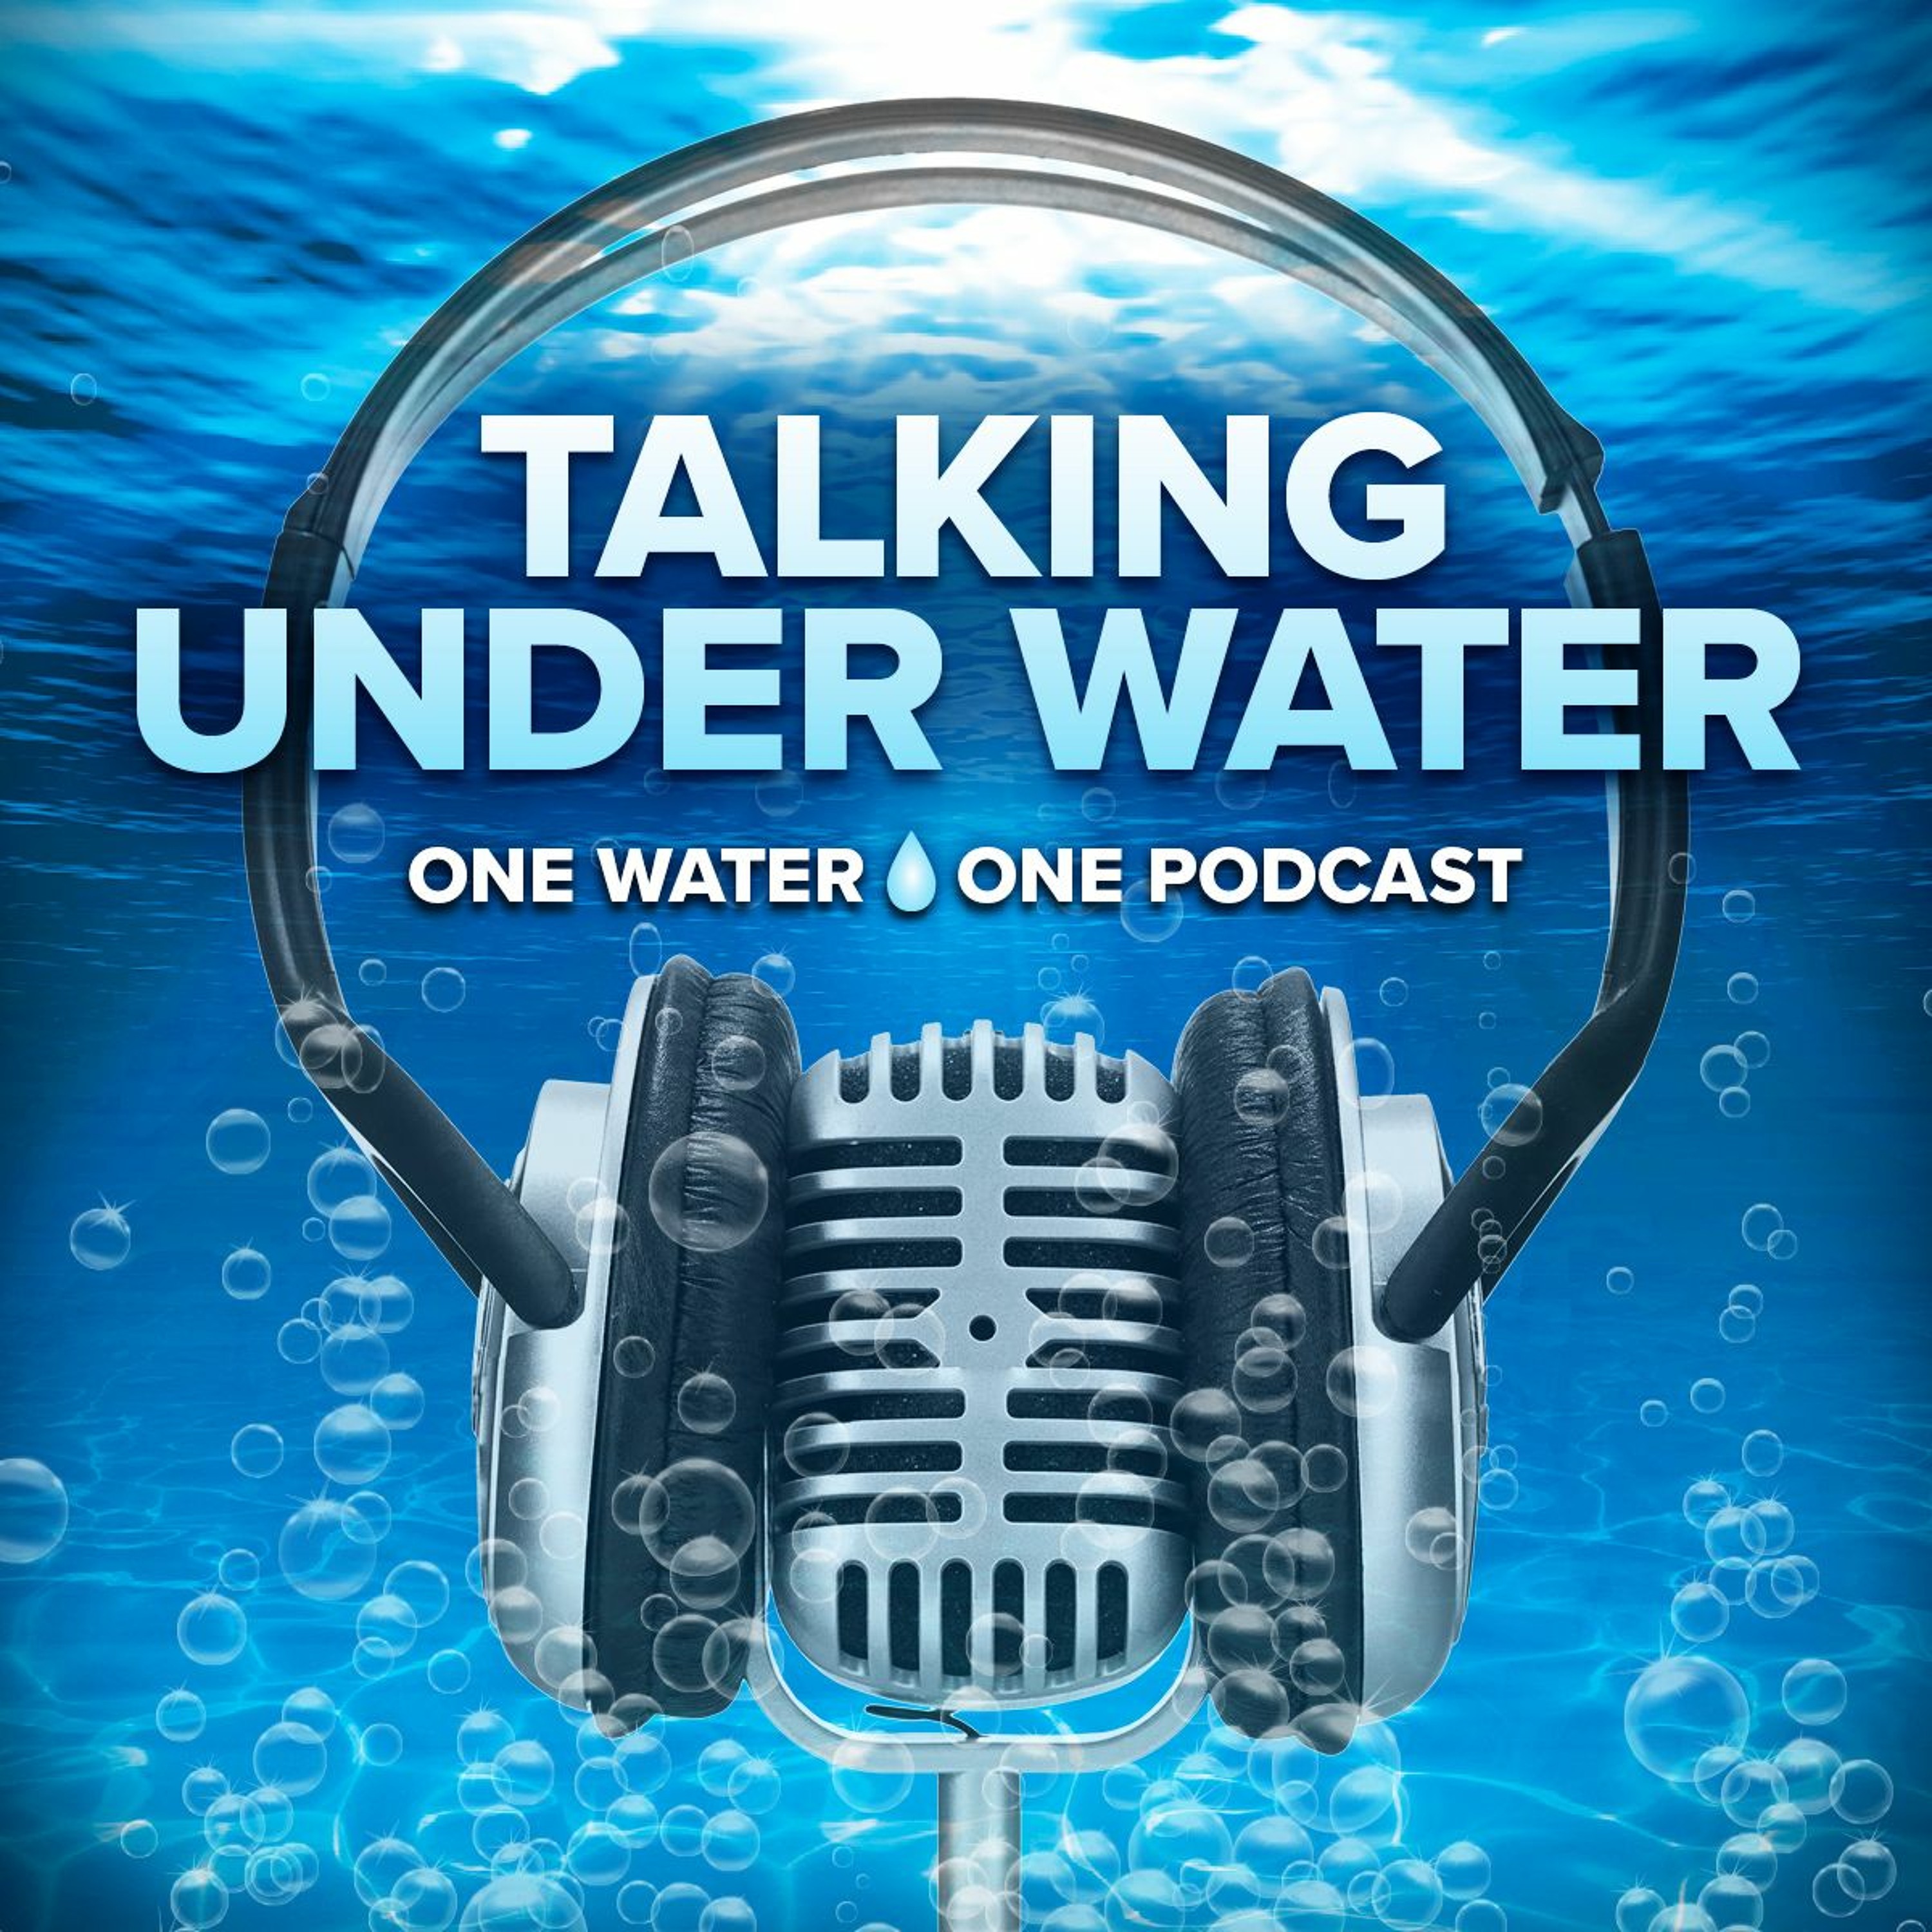 Talking Under Water Episode 40: Funding, Travel & New Technologies